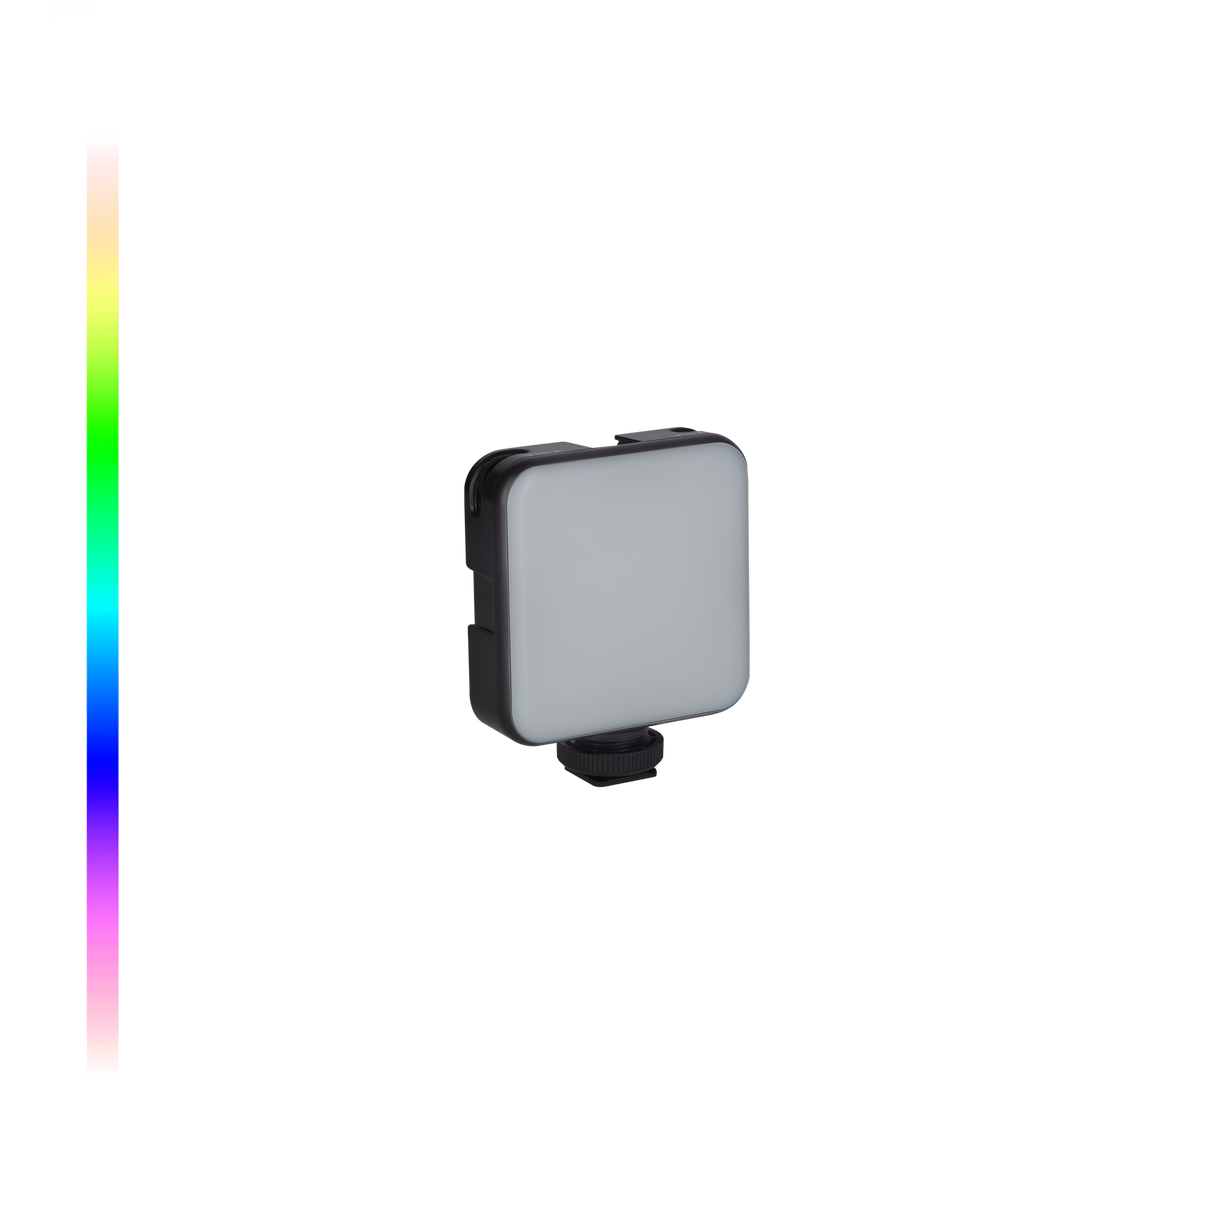 LUMIS Mini LED RGB - LED light – Rollei